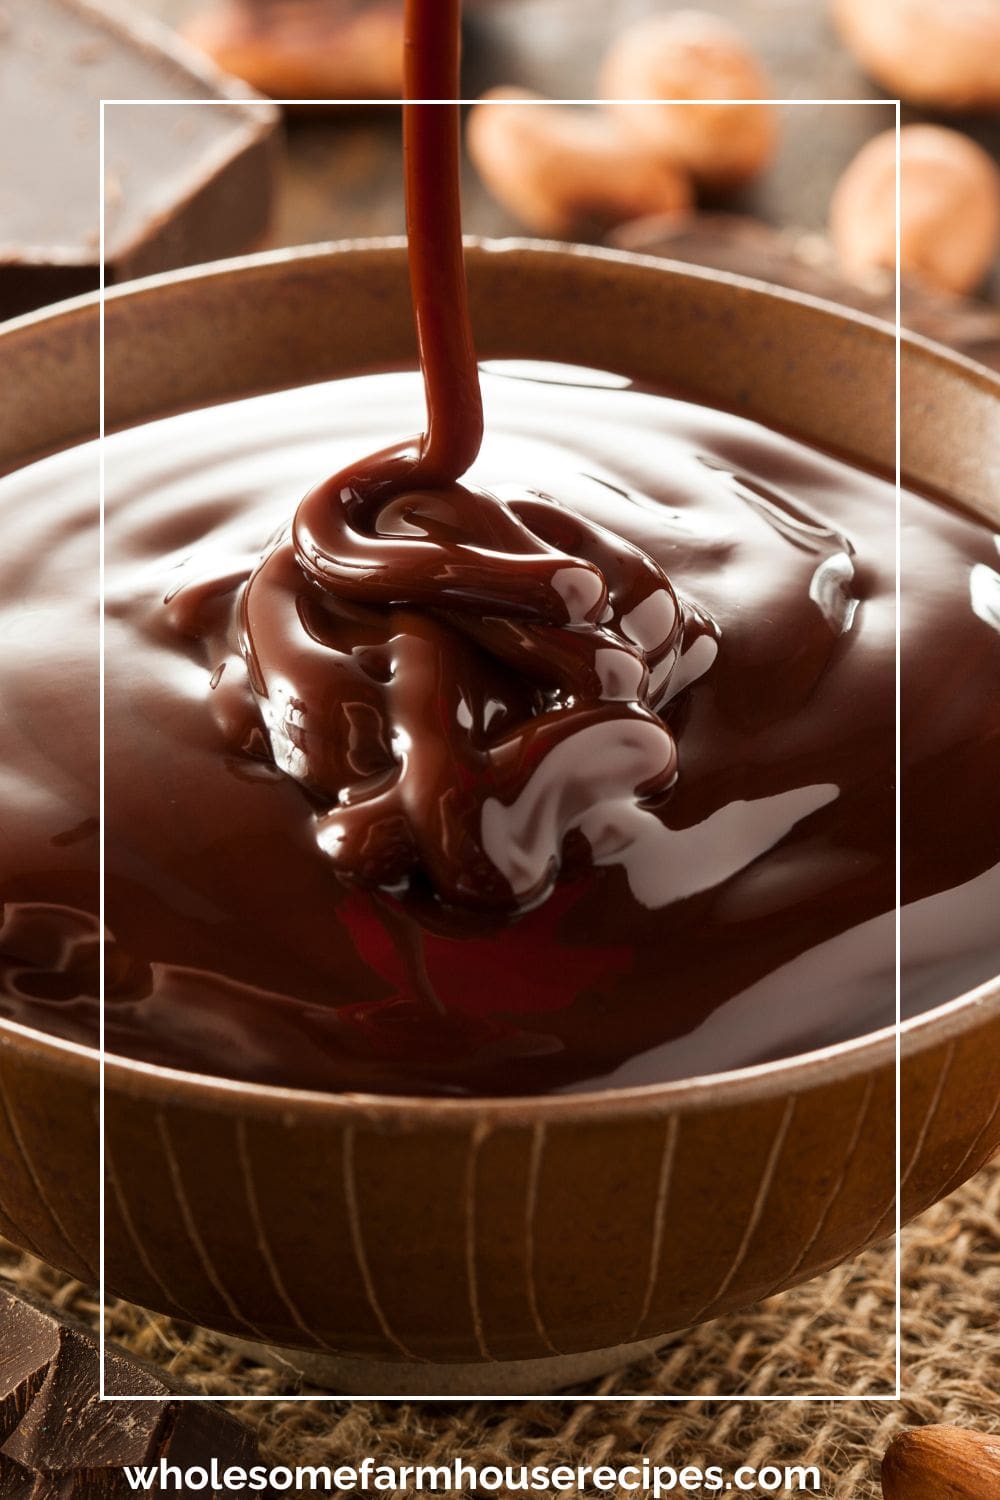 Bowl of Chocolate Sauce